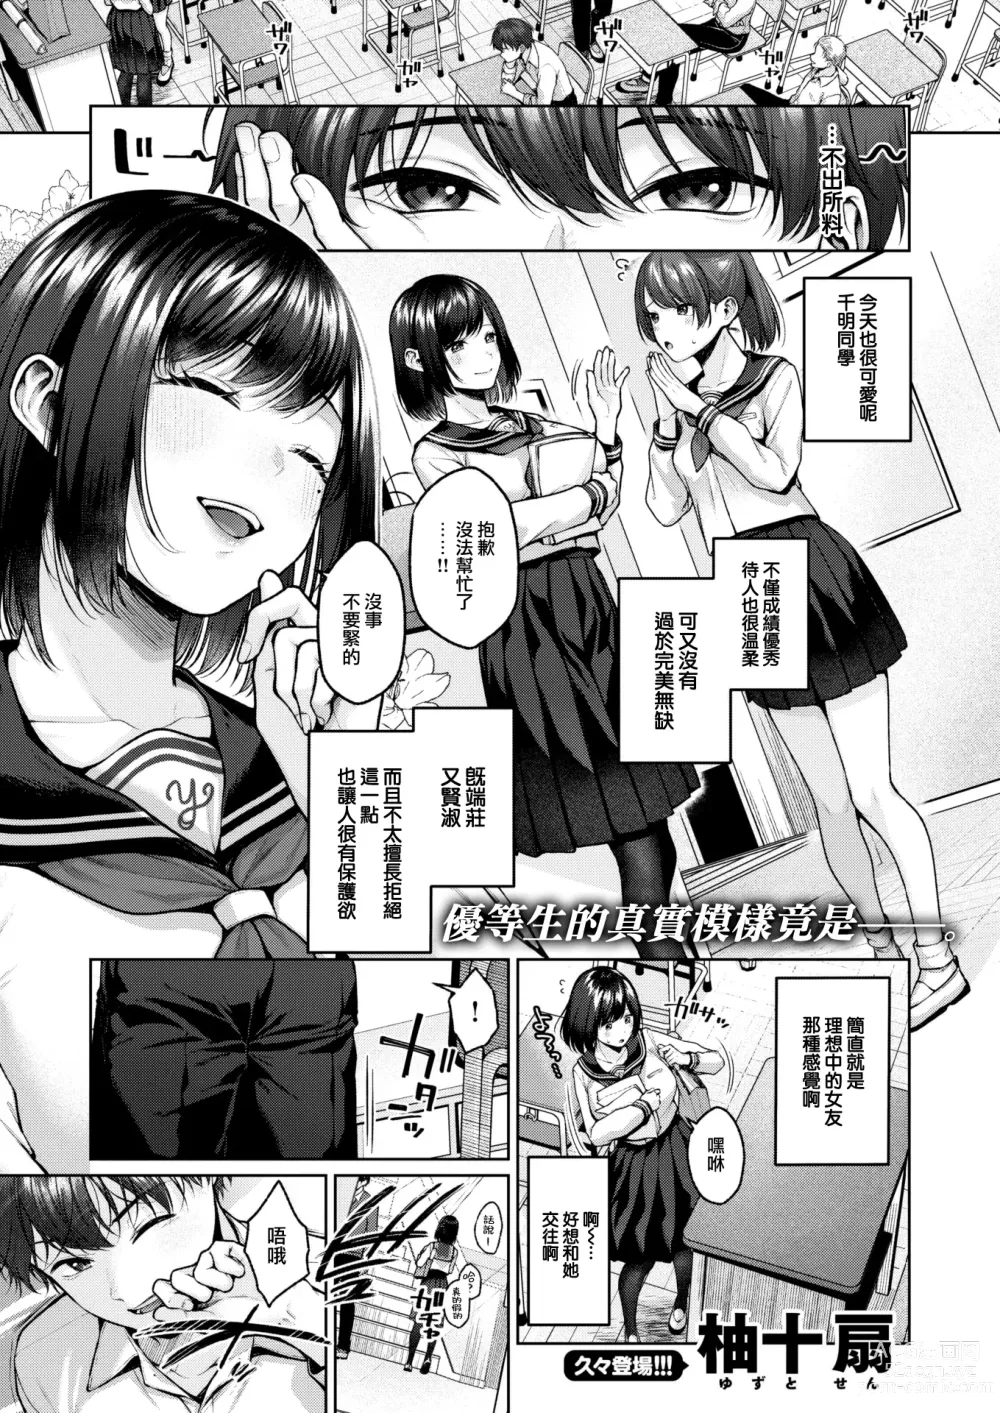 Page 3 of manga Secret Territory